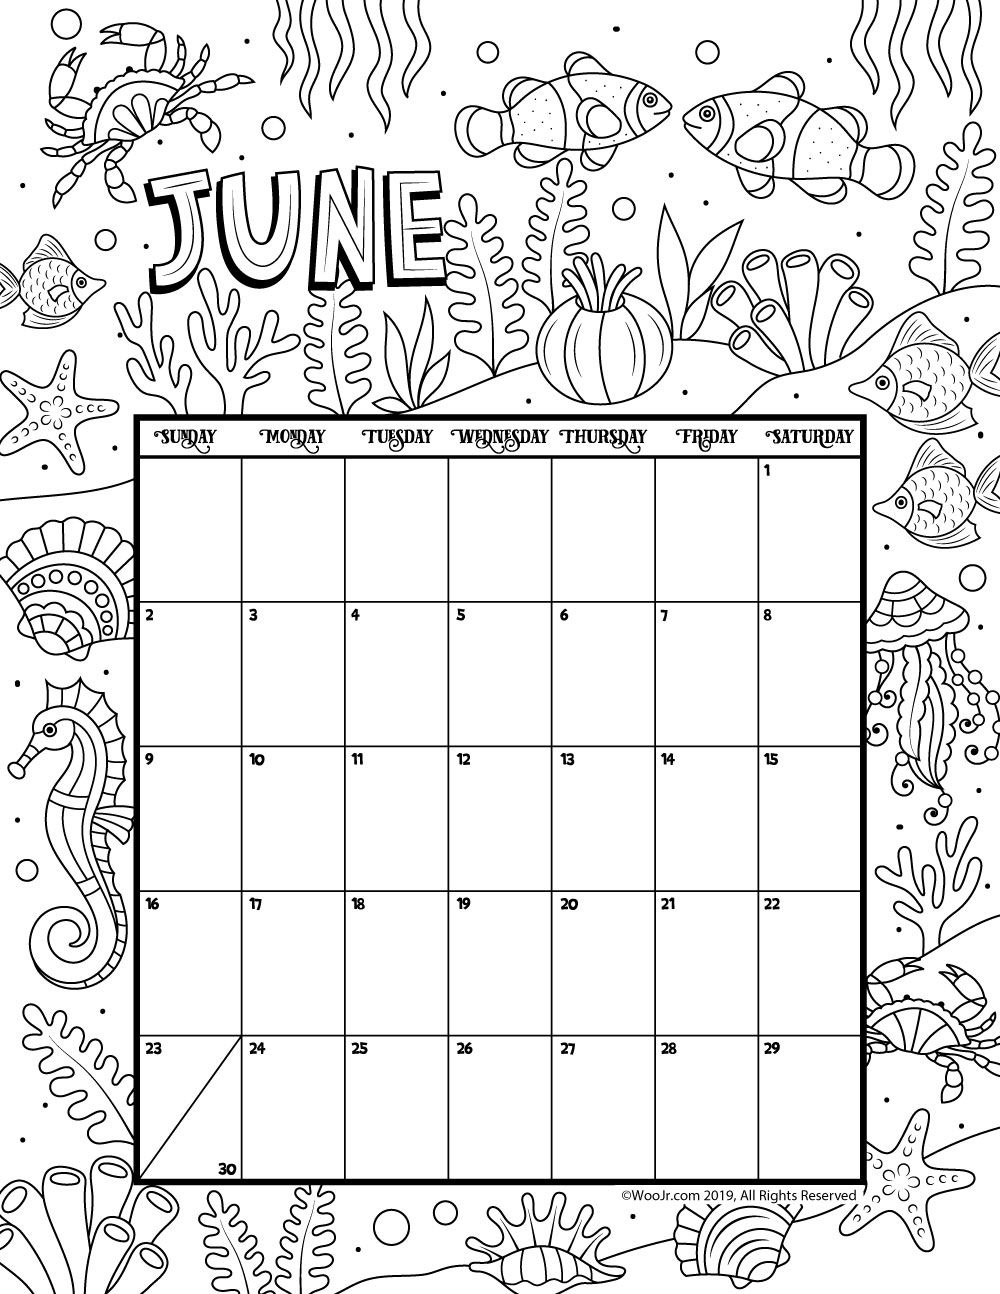 June 2019 Coloring Calendar | Coloring Page | Calendar 2019 pertaining to Free Coloring Calendars For June